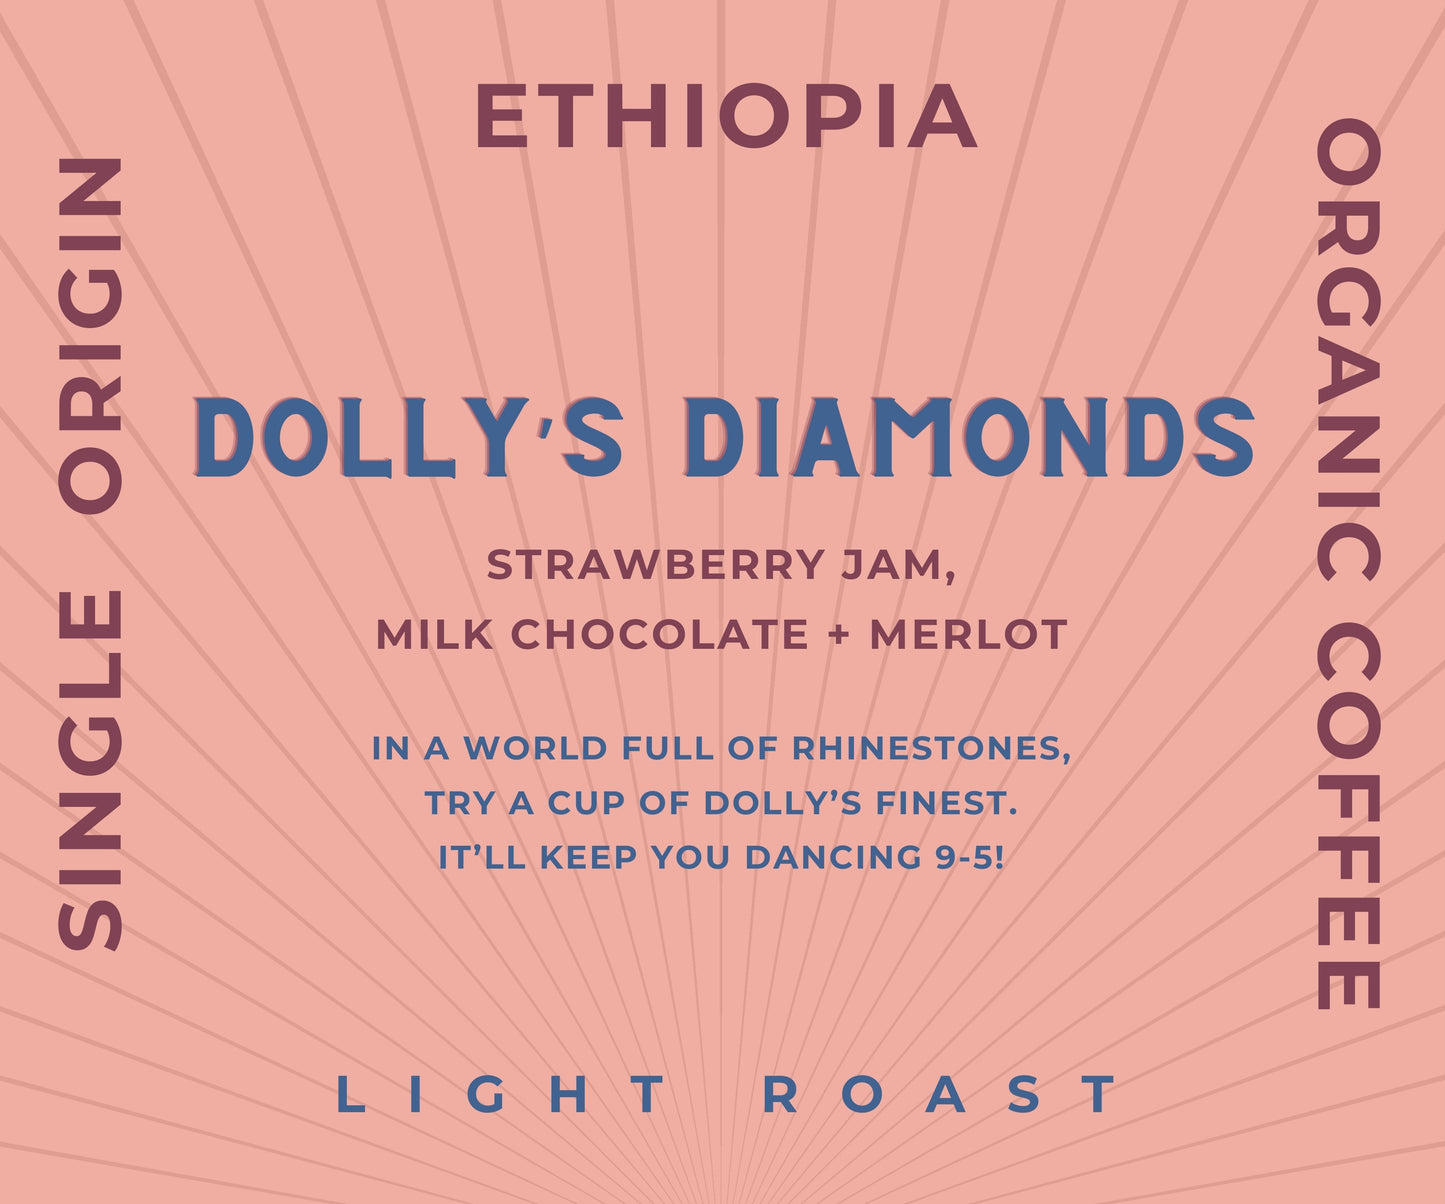 Dolly's Diamonds - Single Origin Ethiopia